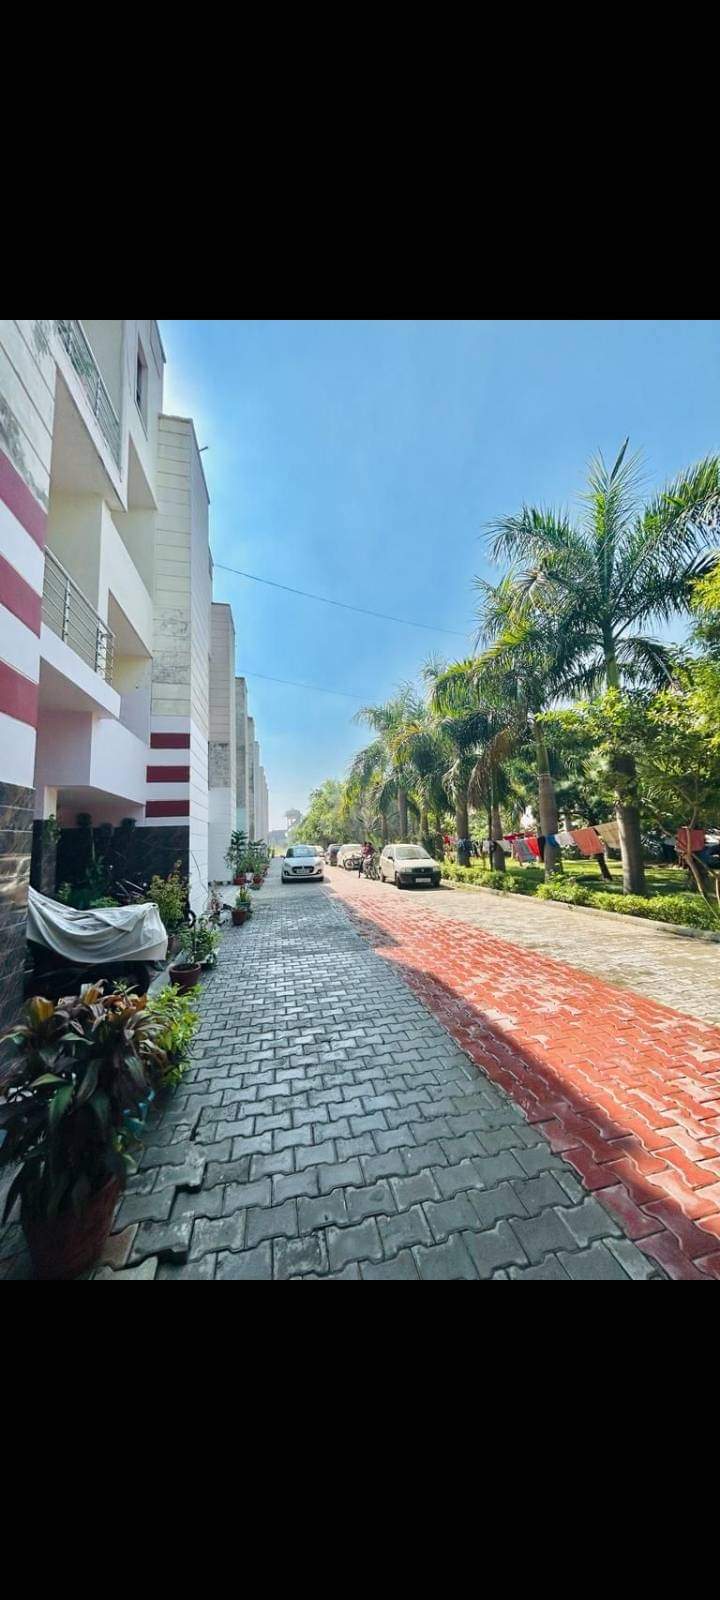 Modipuram dwarika dham mda approved flat at prime location 